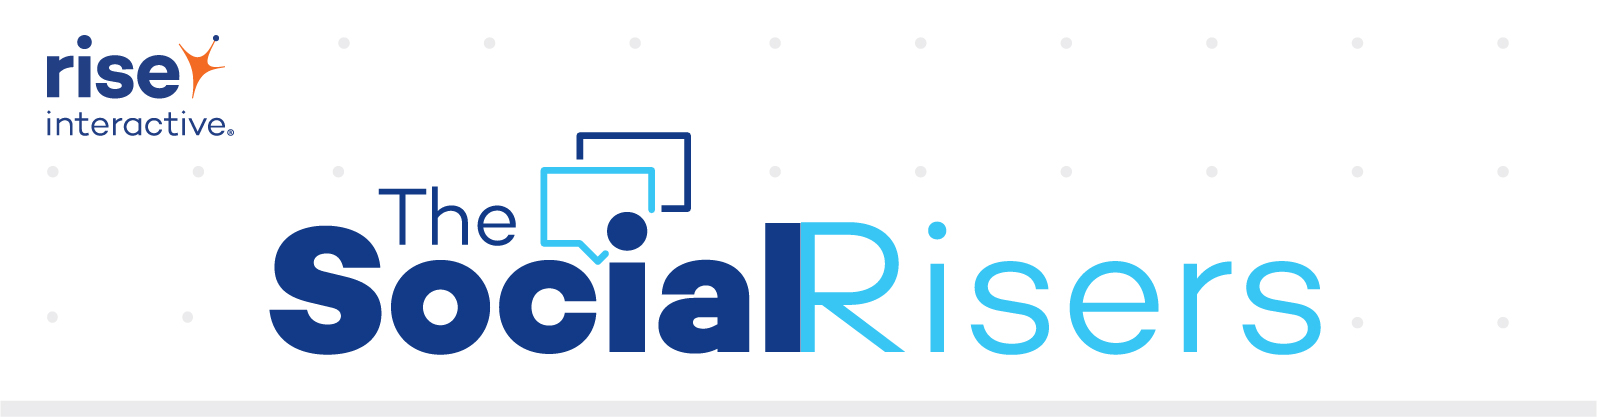 The Social Risers Logo